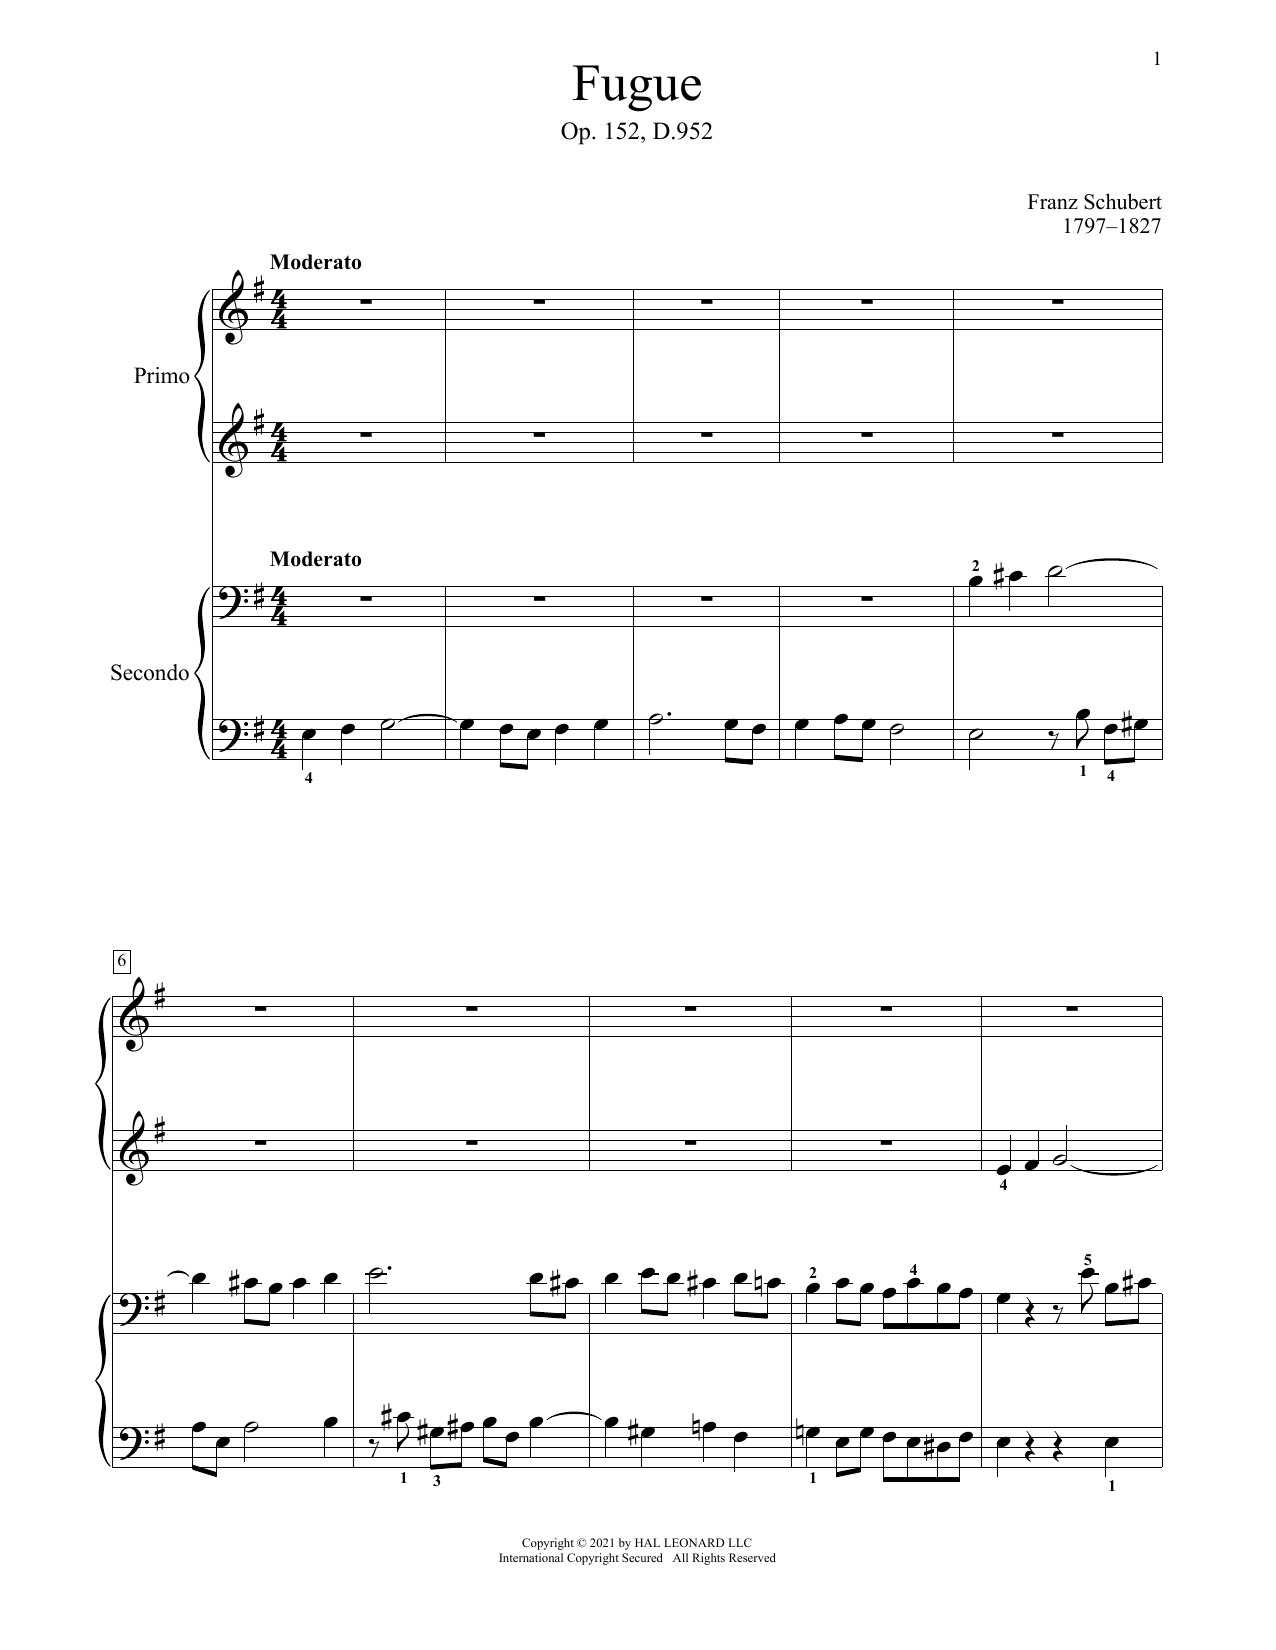 Franz Schubert Fugue, Op. 152, D. 952 Sheet Music Notes & Chords for Piano Duet - Download or Print PDF